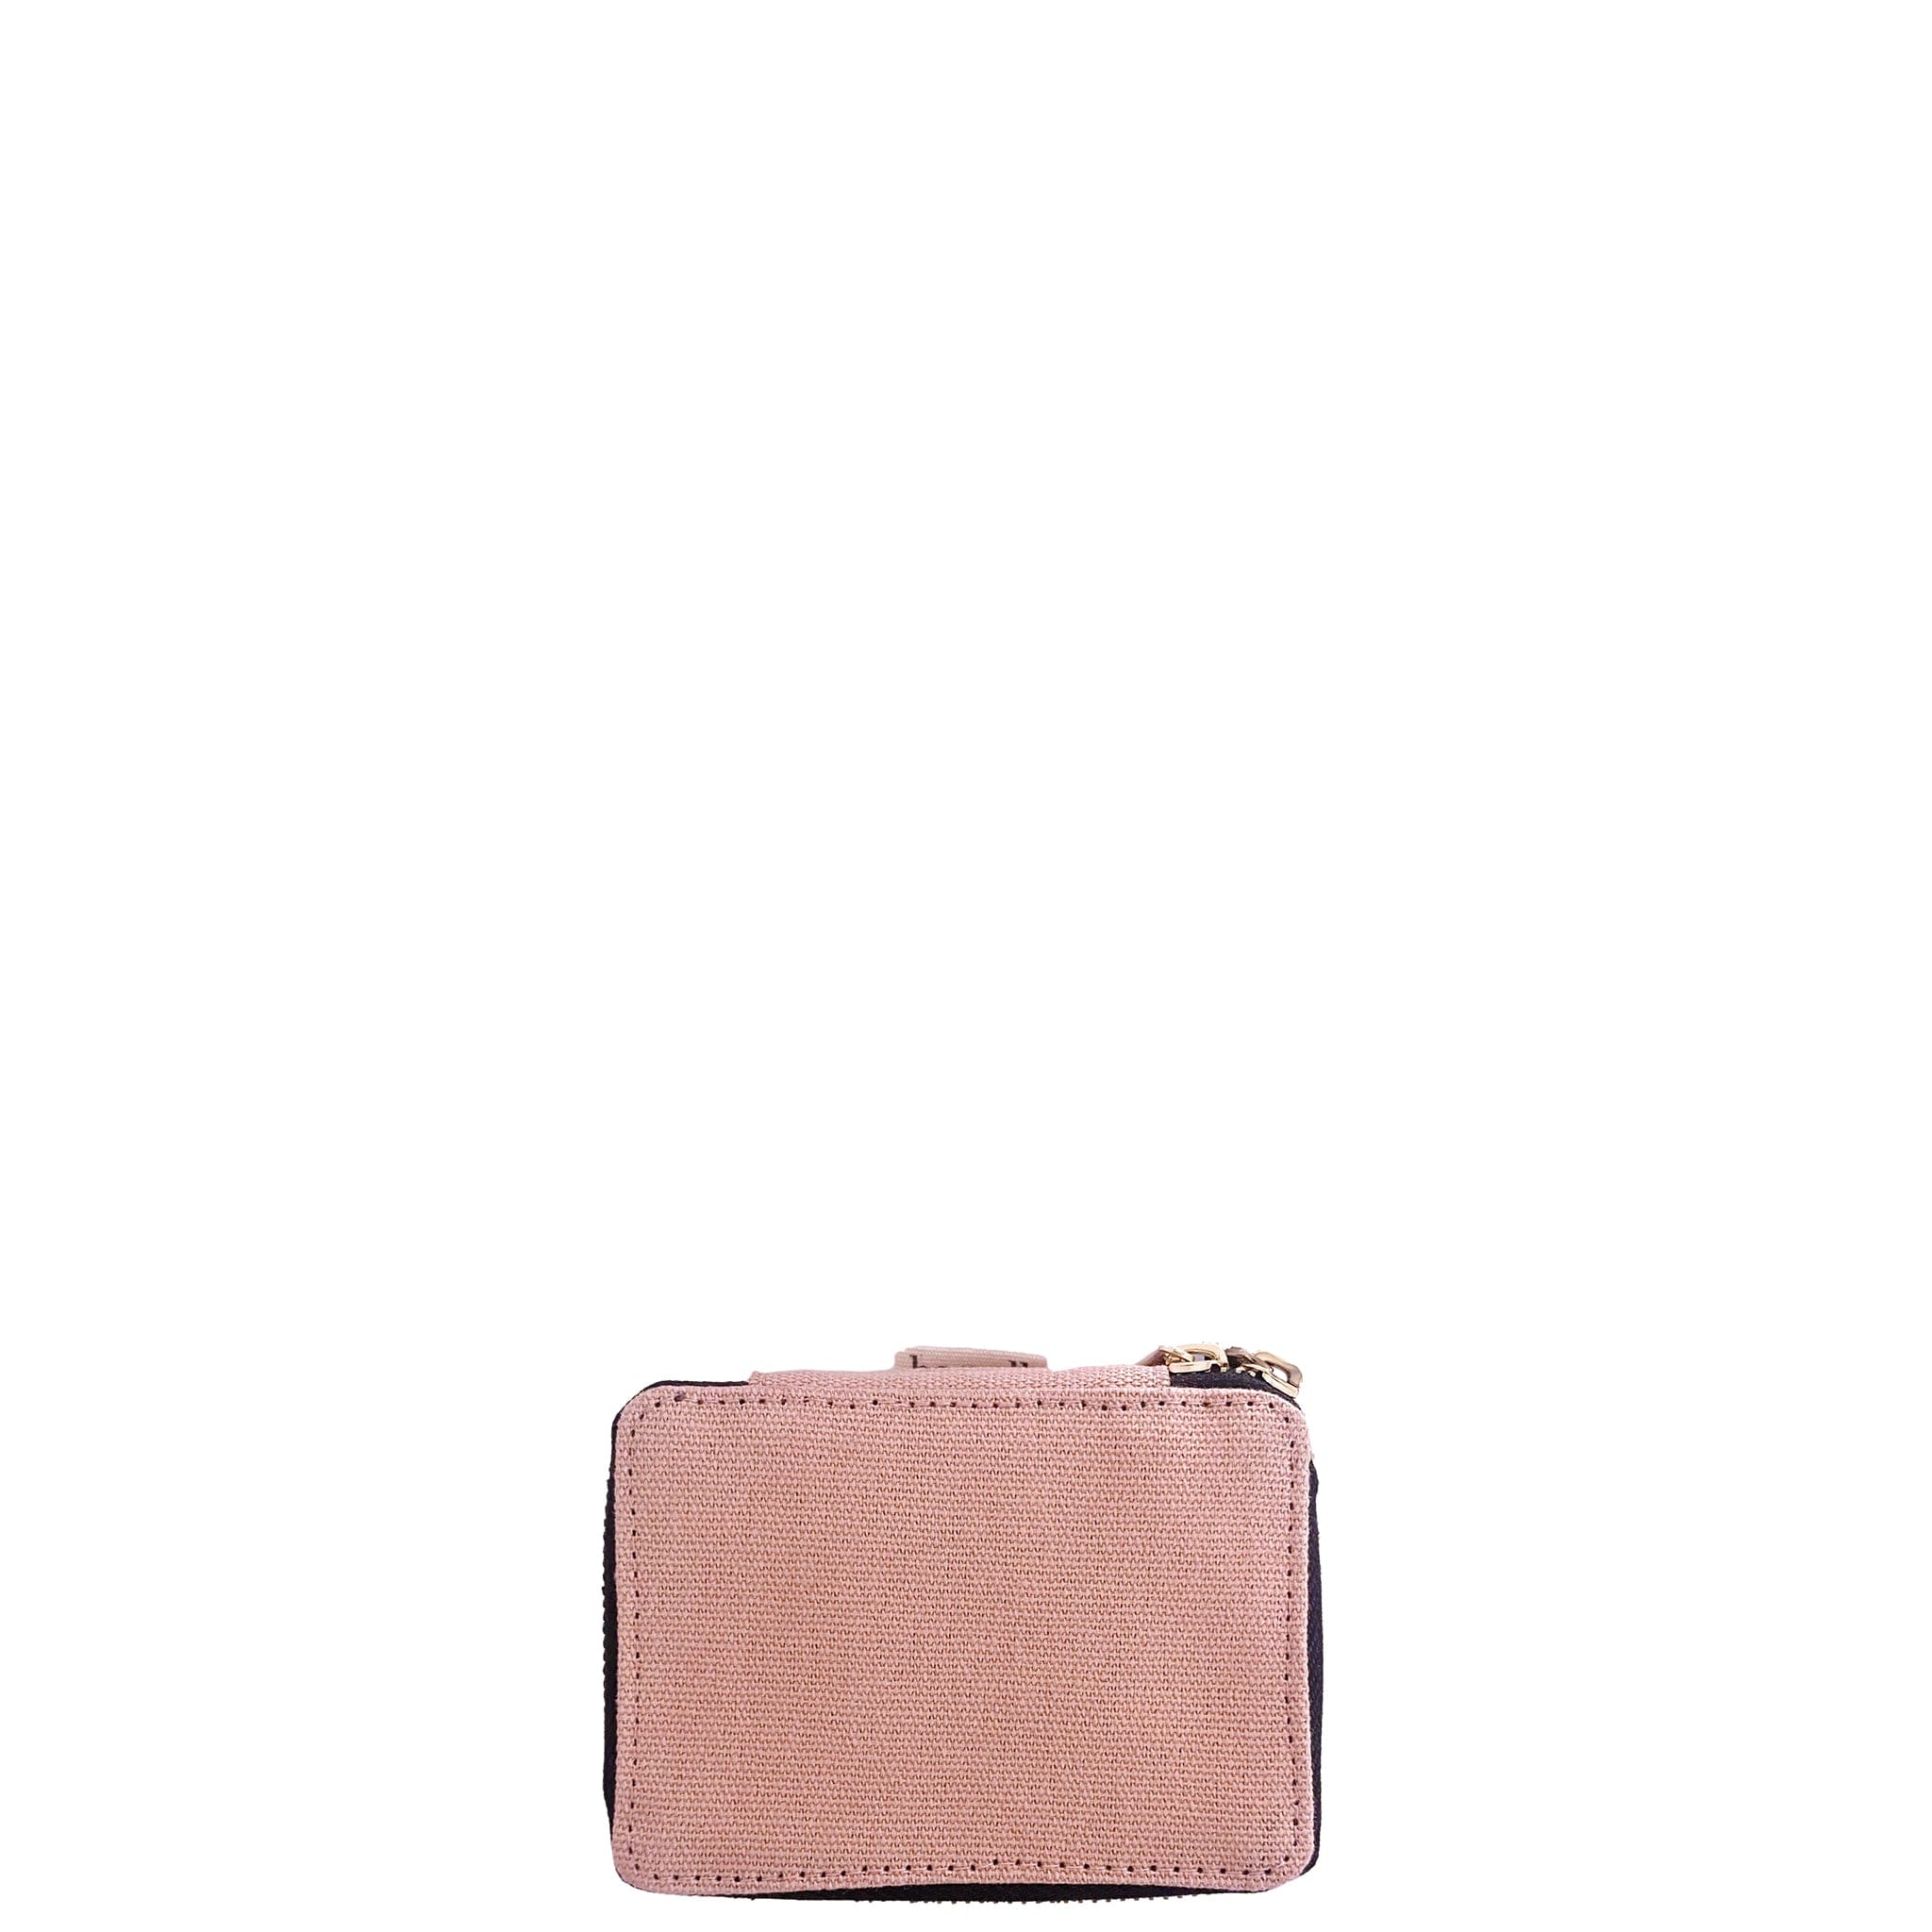 Jewelry/Trinket Box, Pink/Blush | Bag-all